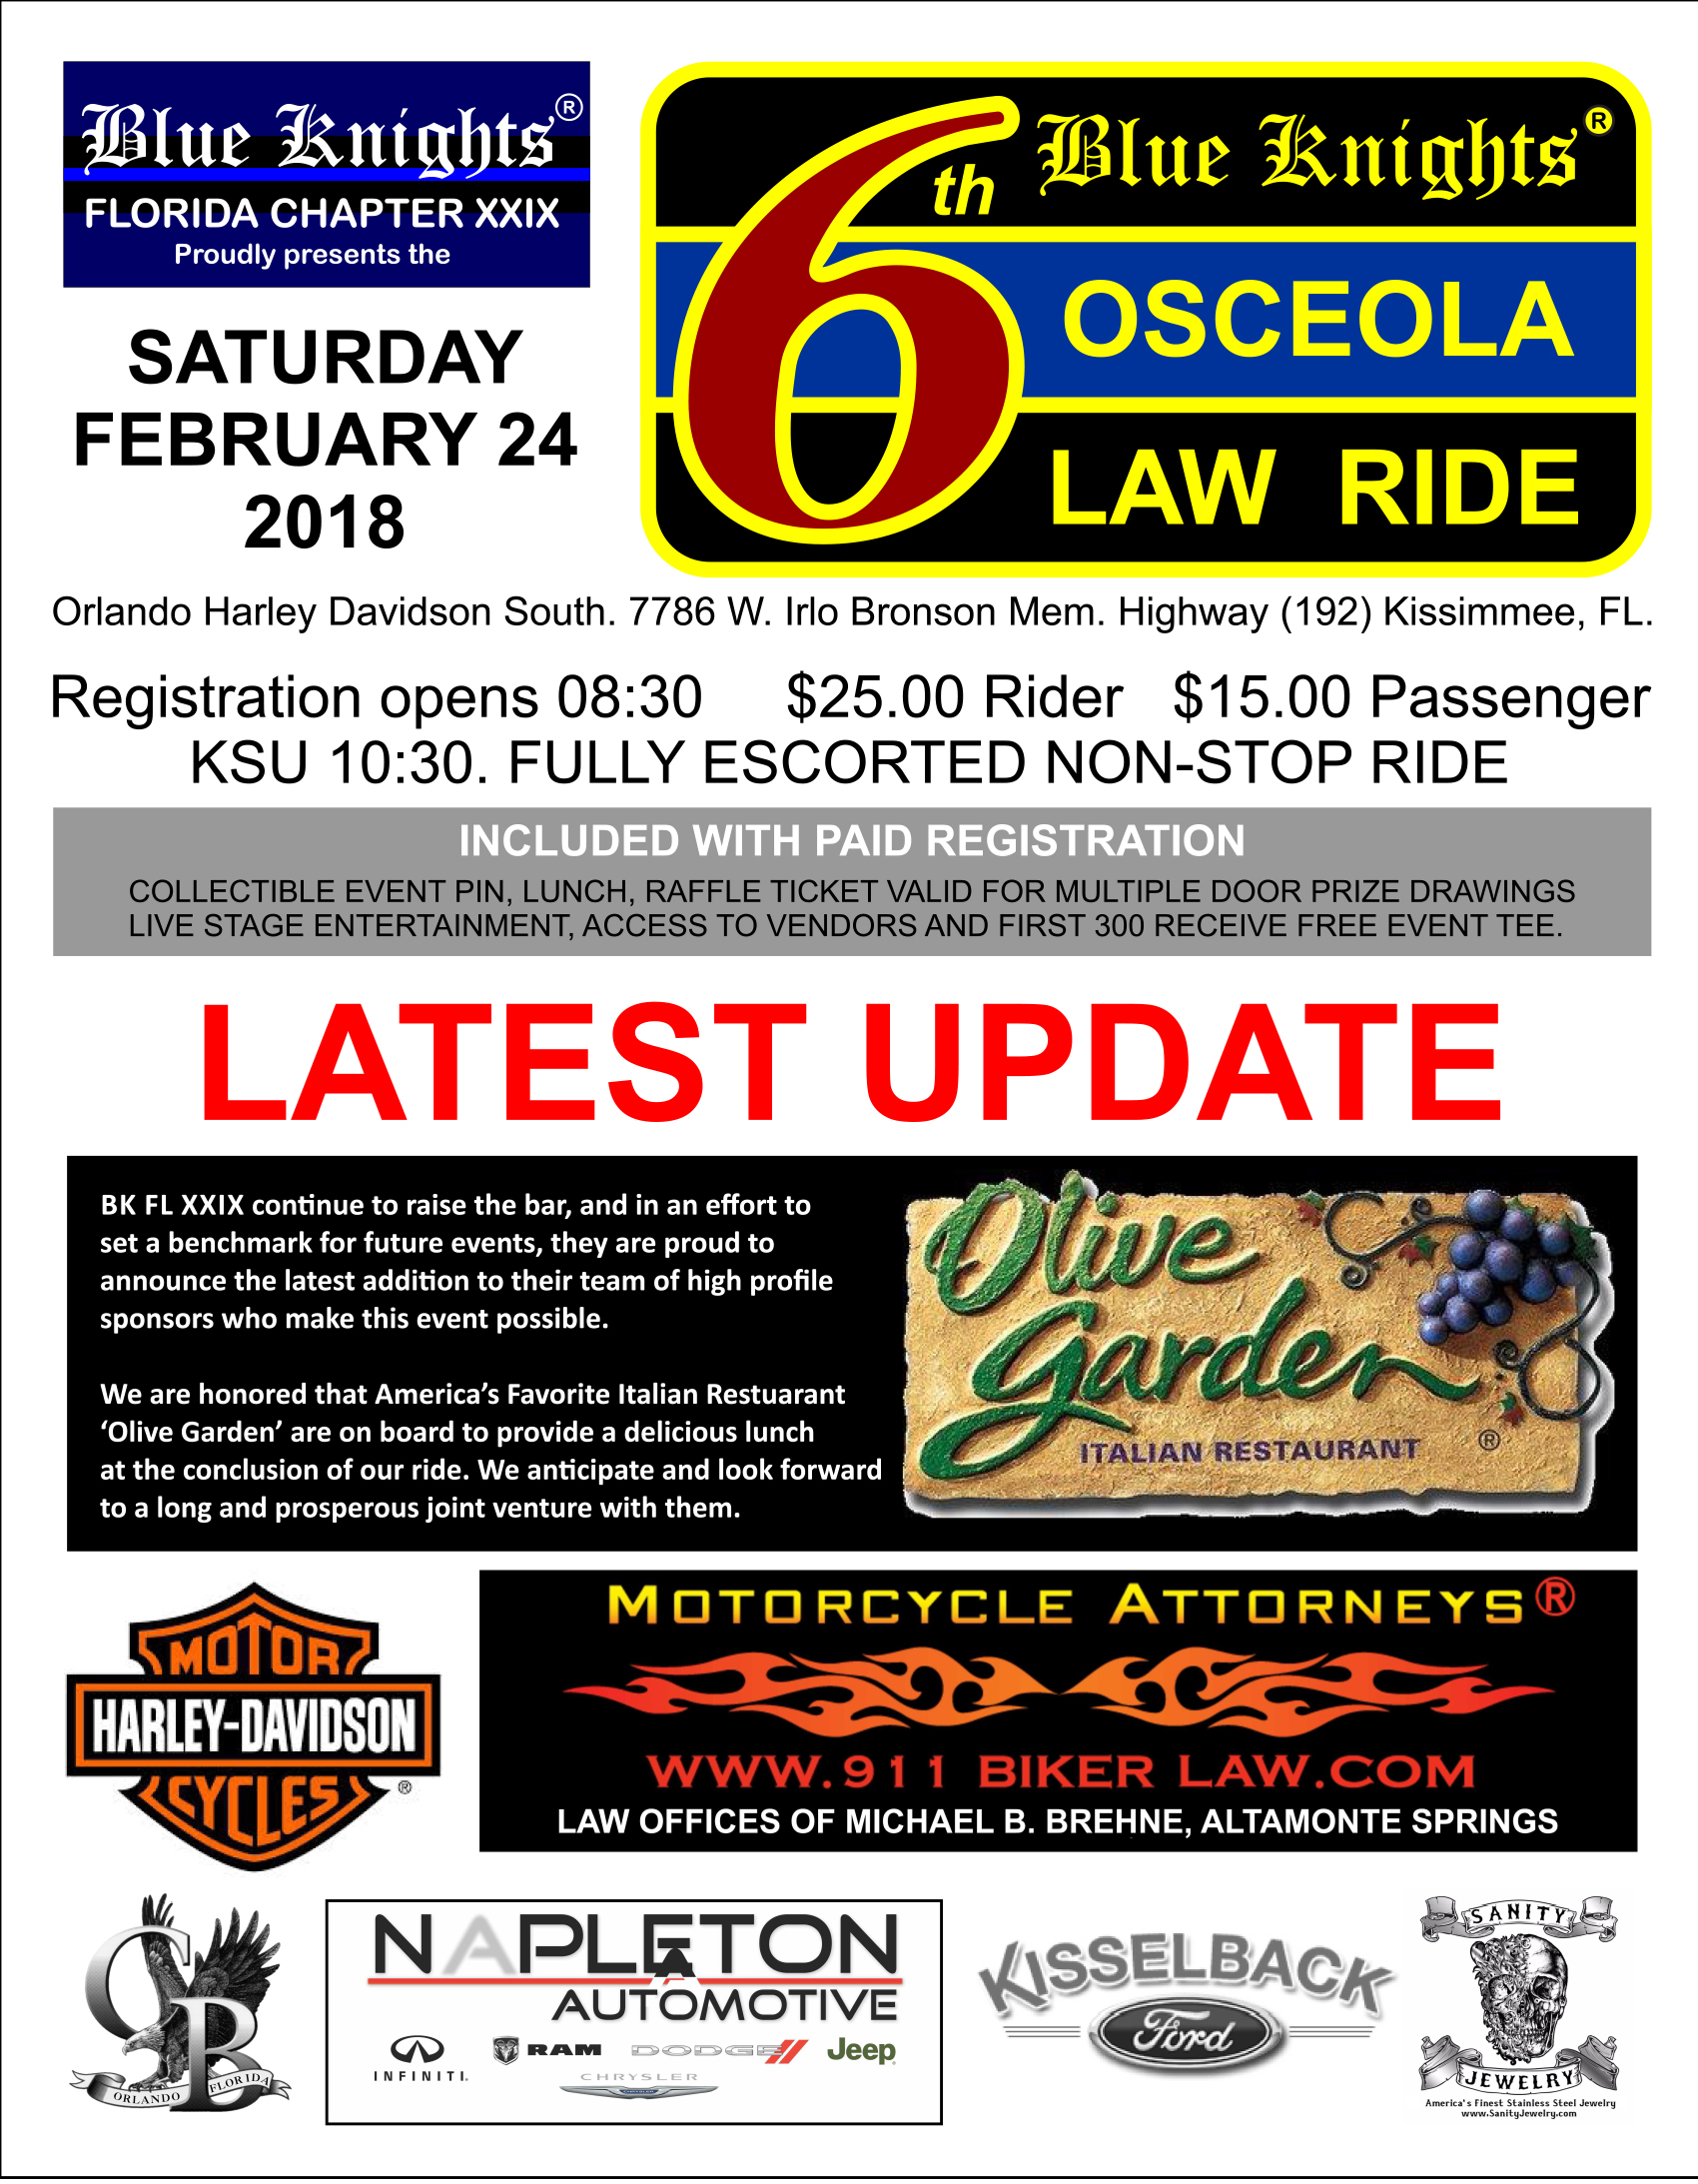 6th Blue Knights Osceola Law Ride